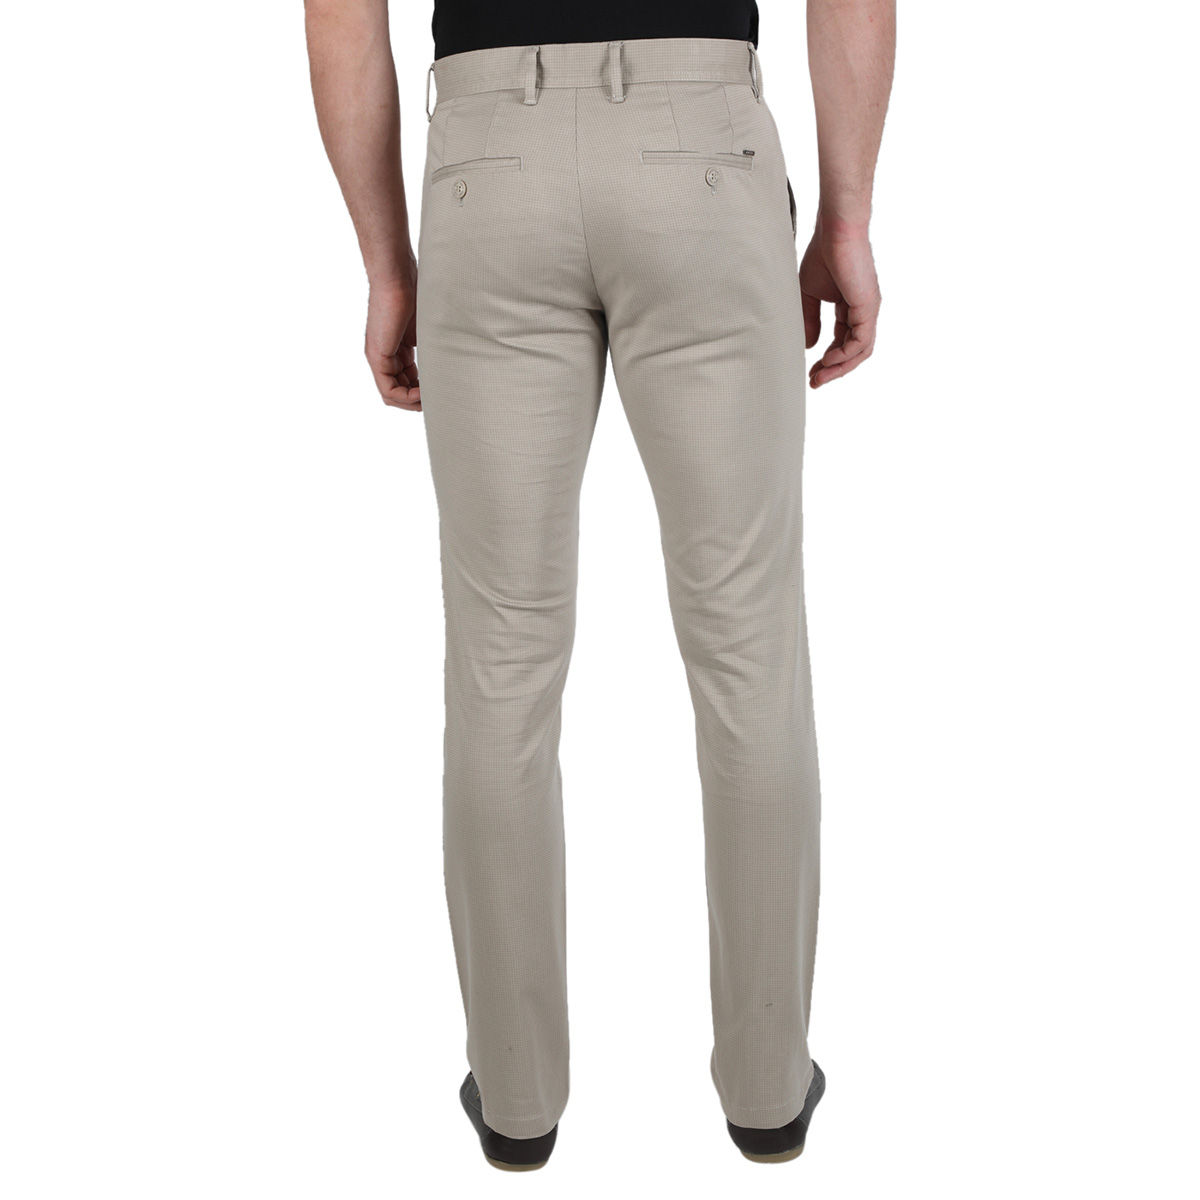 Polo & Jockey Club Monte Carlo Cotton Plaid Pajama Lounge Pants Adult Size  M NWT | eBay